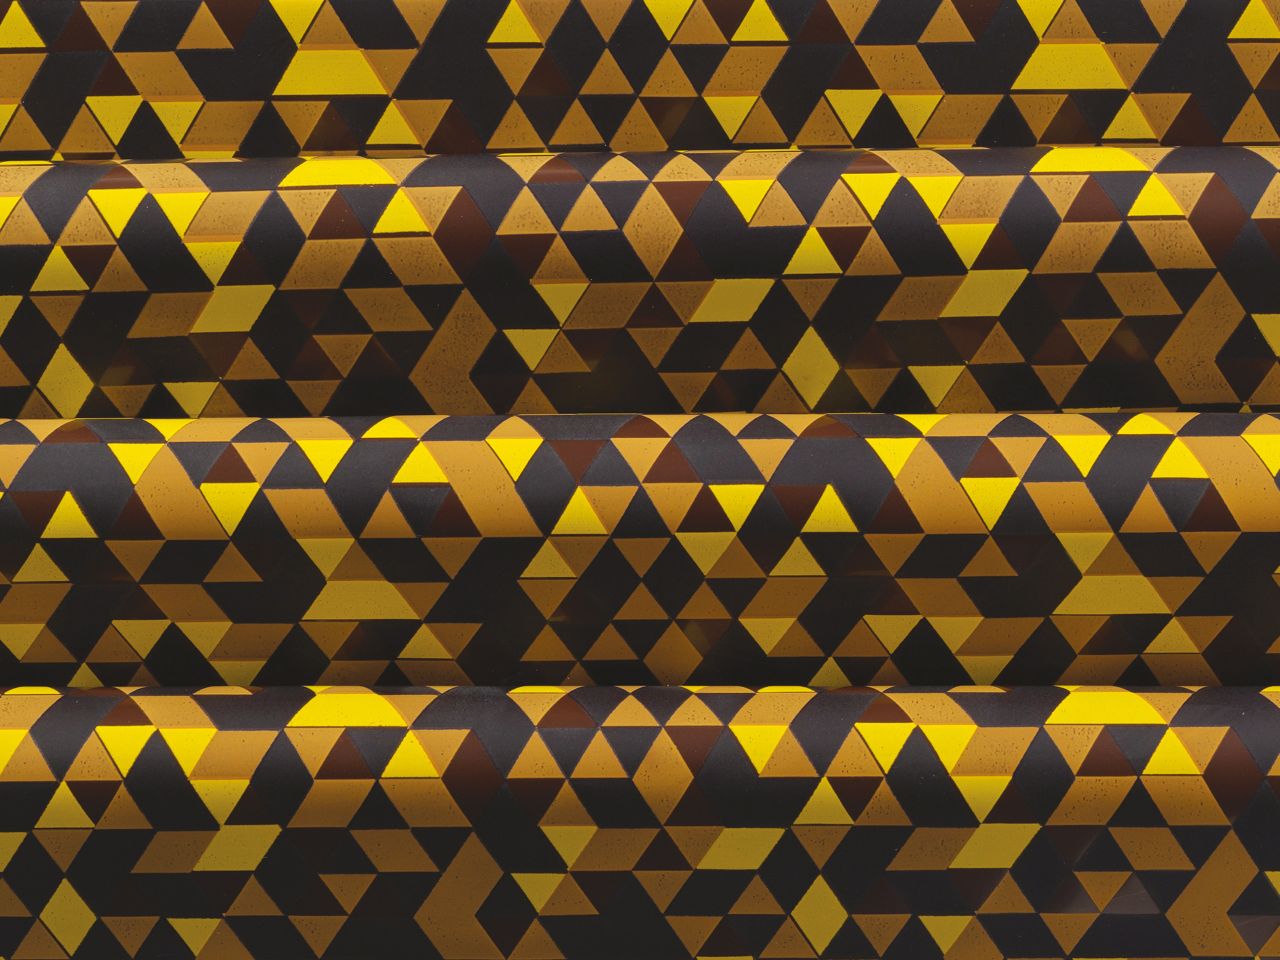 Transferfolie: Kaleidoscope, Kakaobutter, Schwarz-Gelb, 40 x 25 cm